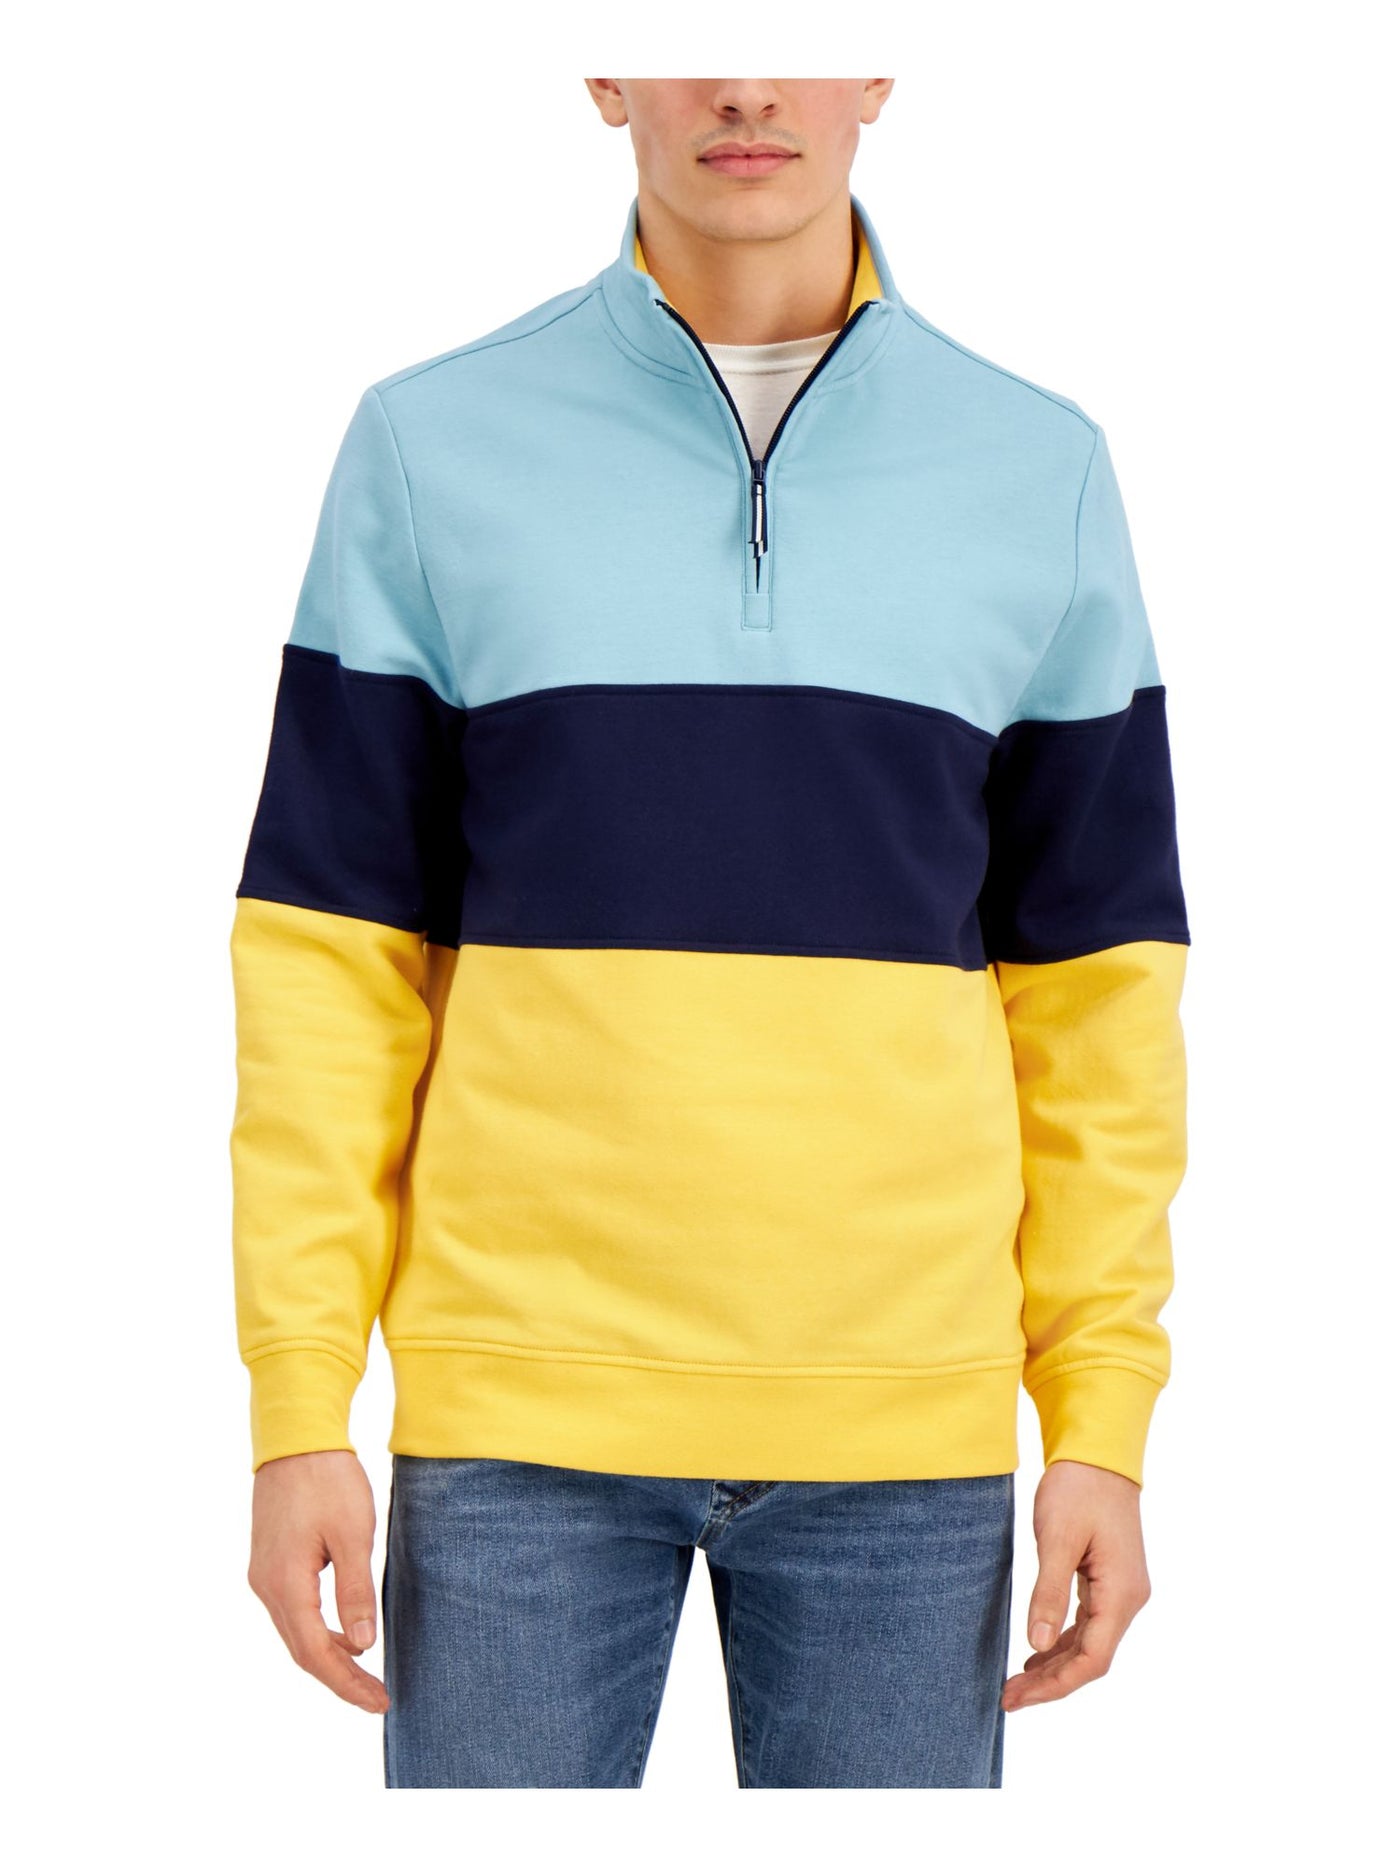 CLUBROOM Mens Yellow Color Block Athletic Fit Quarter-Zip Casual Shirt XXL